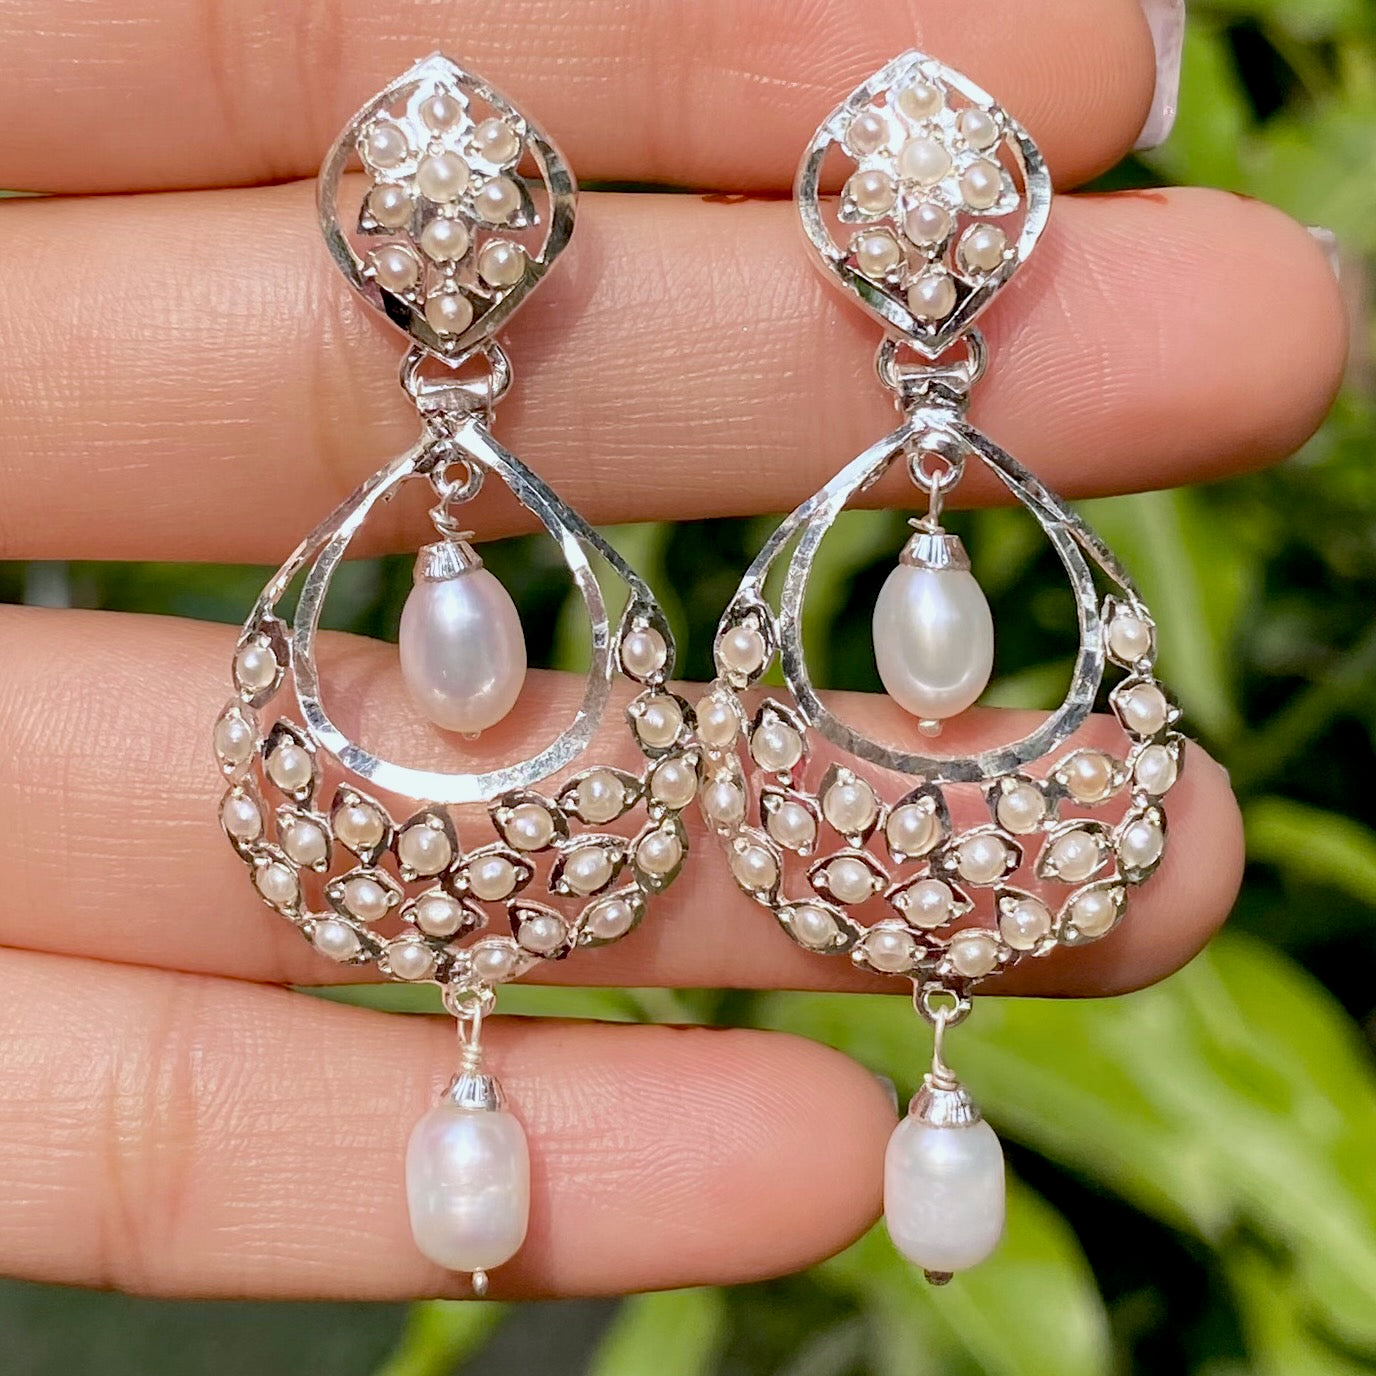 dainty silver earrings with pearl drops